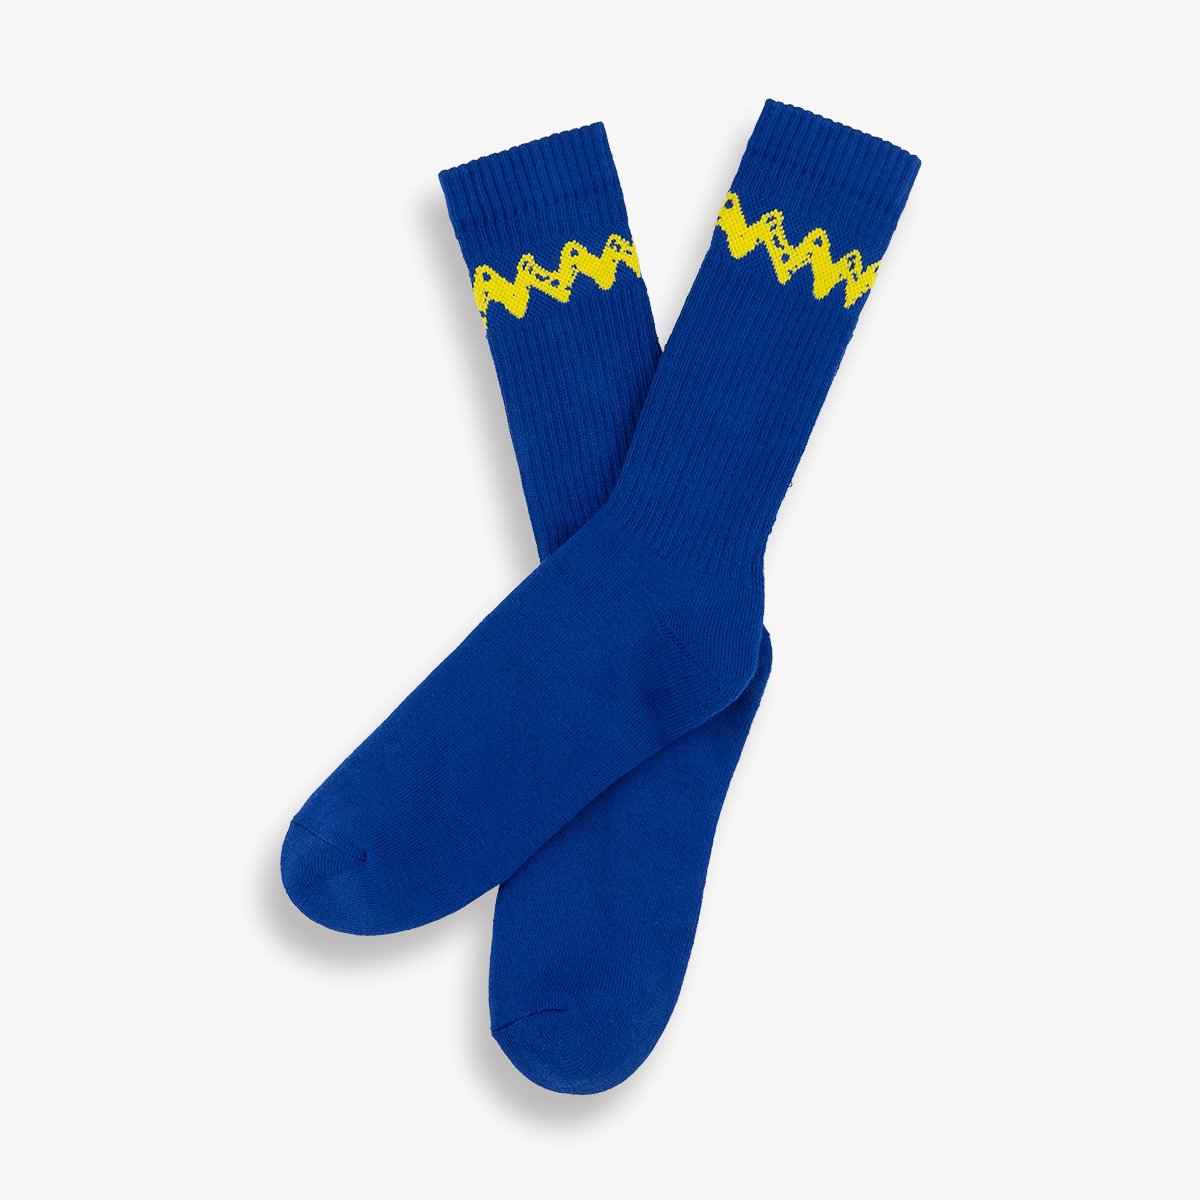 Charlie Brown Socks - SIZE 3-6